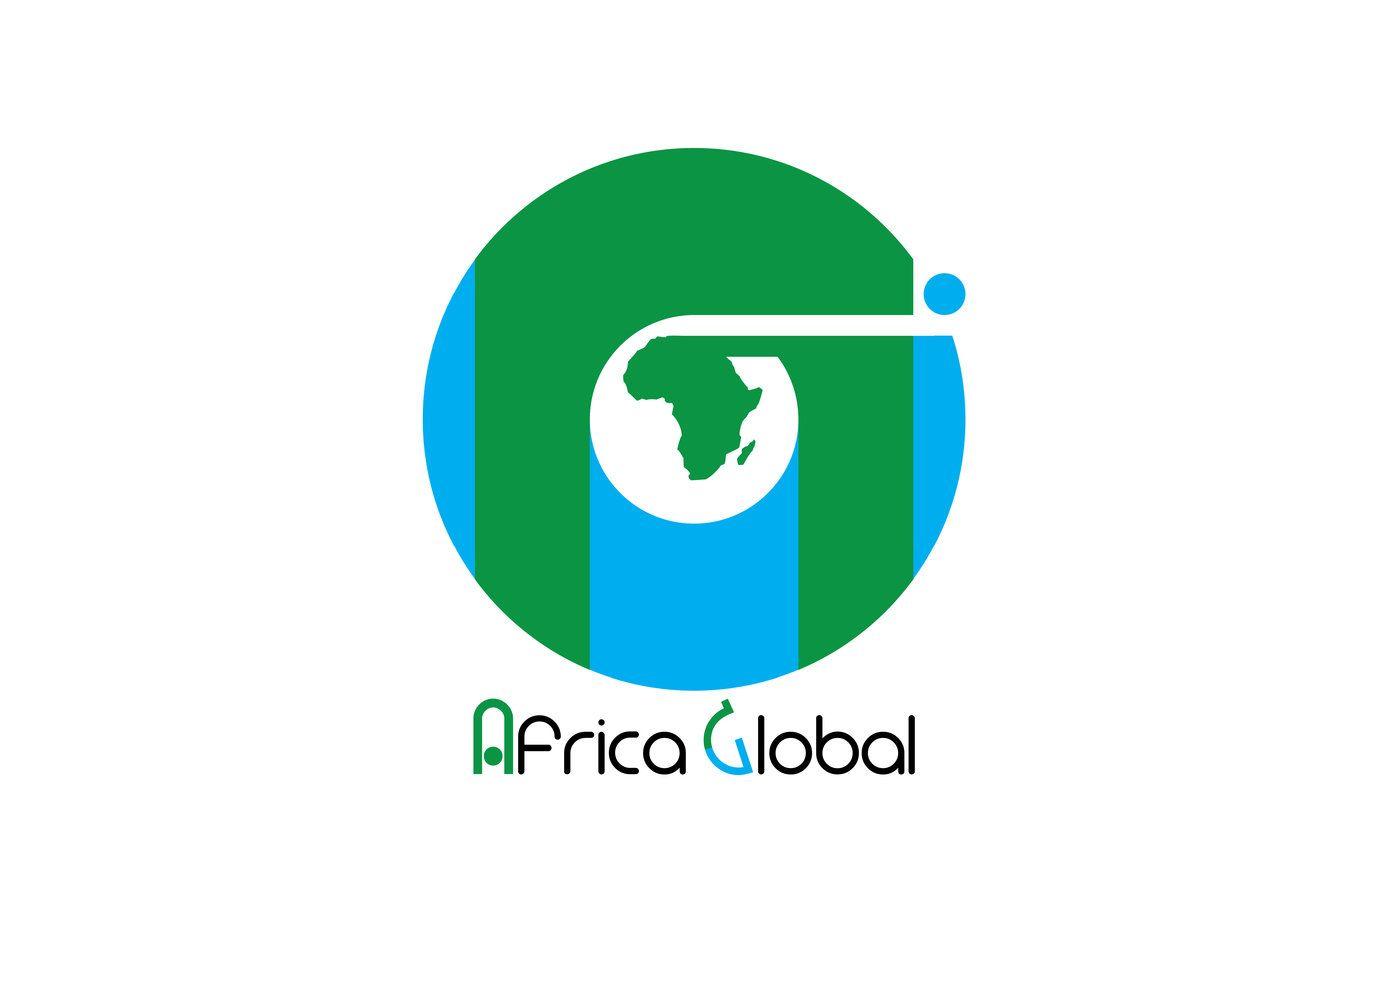 Africa Global Logo - Africa Global Logo Design By Ping Yi (Benny) Lu At Coroflot.com